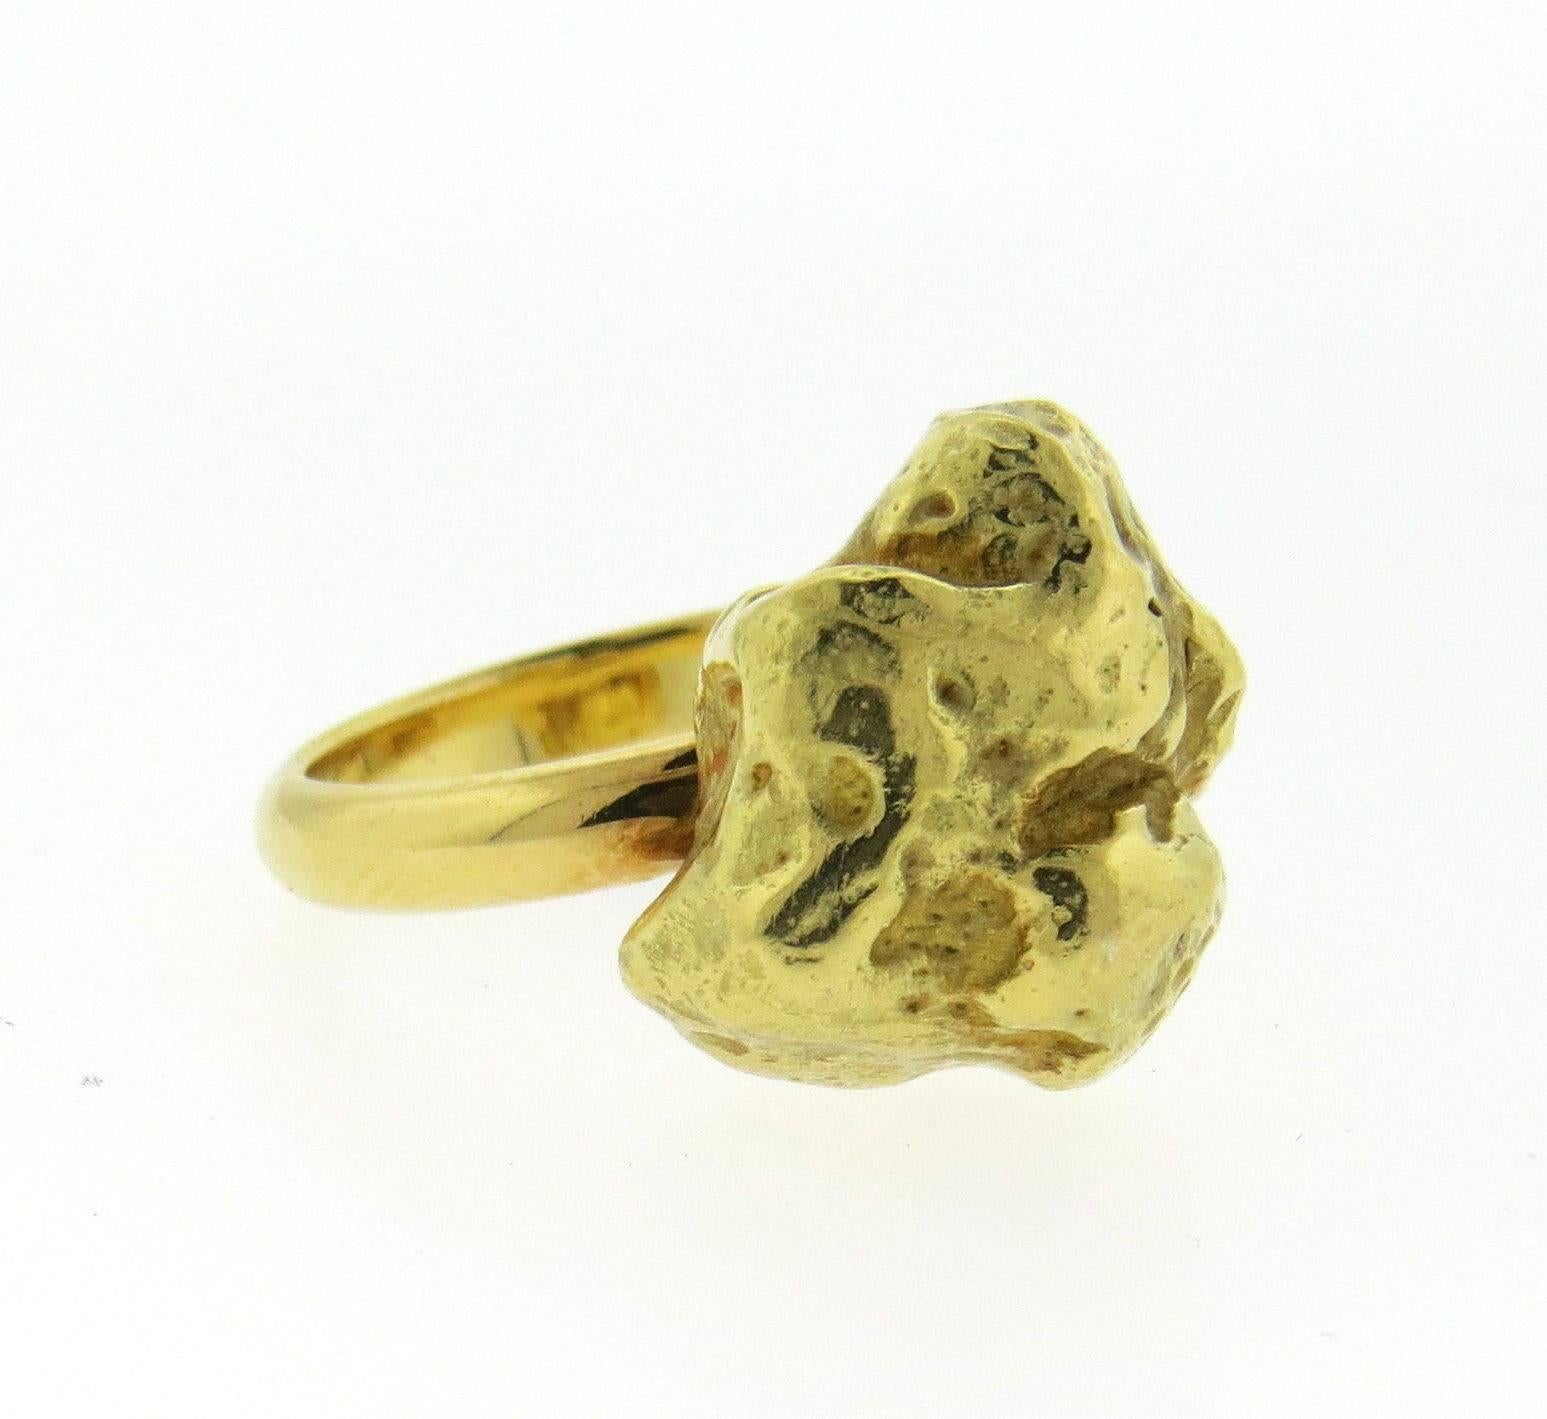 Women's Solange Azagury Partridge Gold Nugget Ring